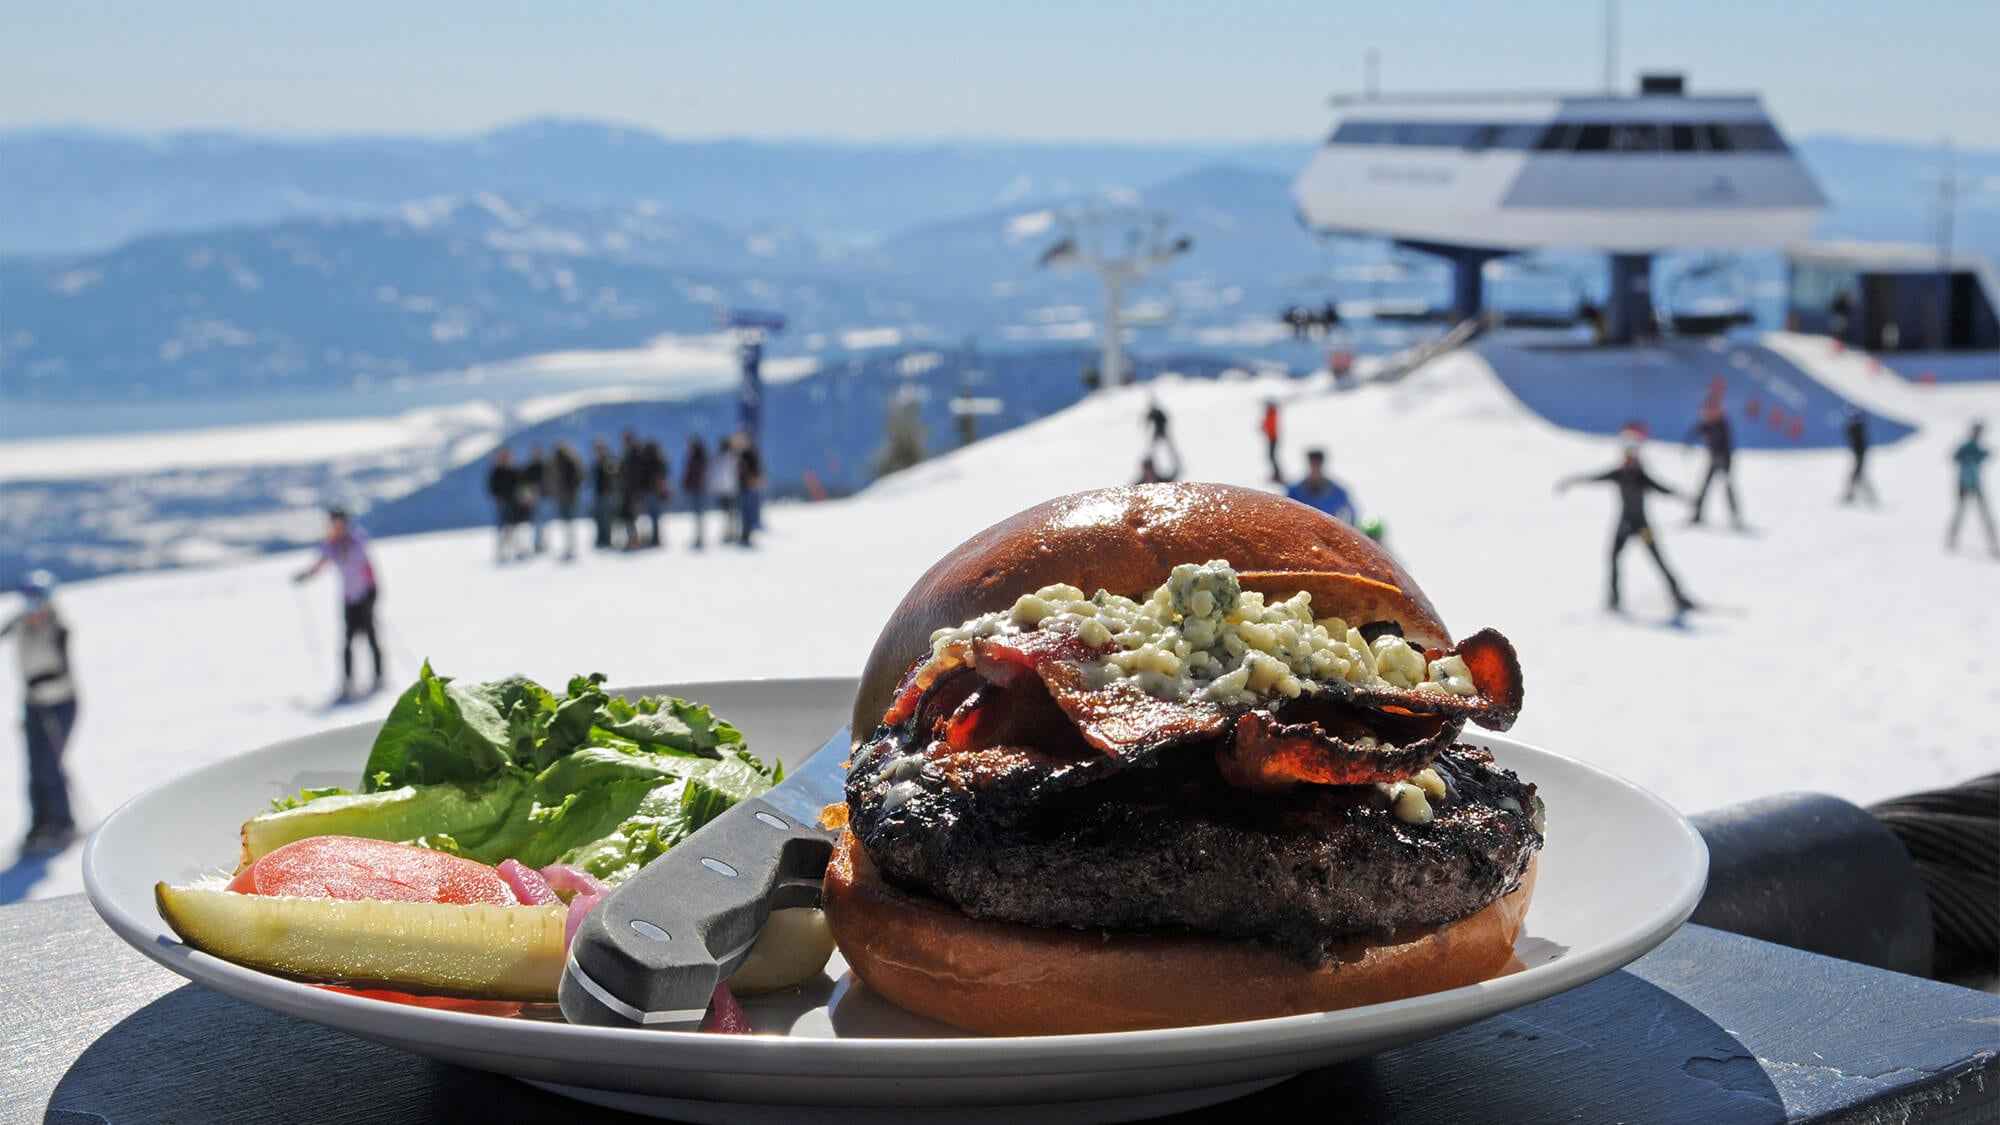 Red Hawk hamburger at the summit